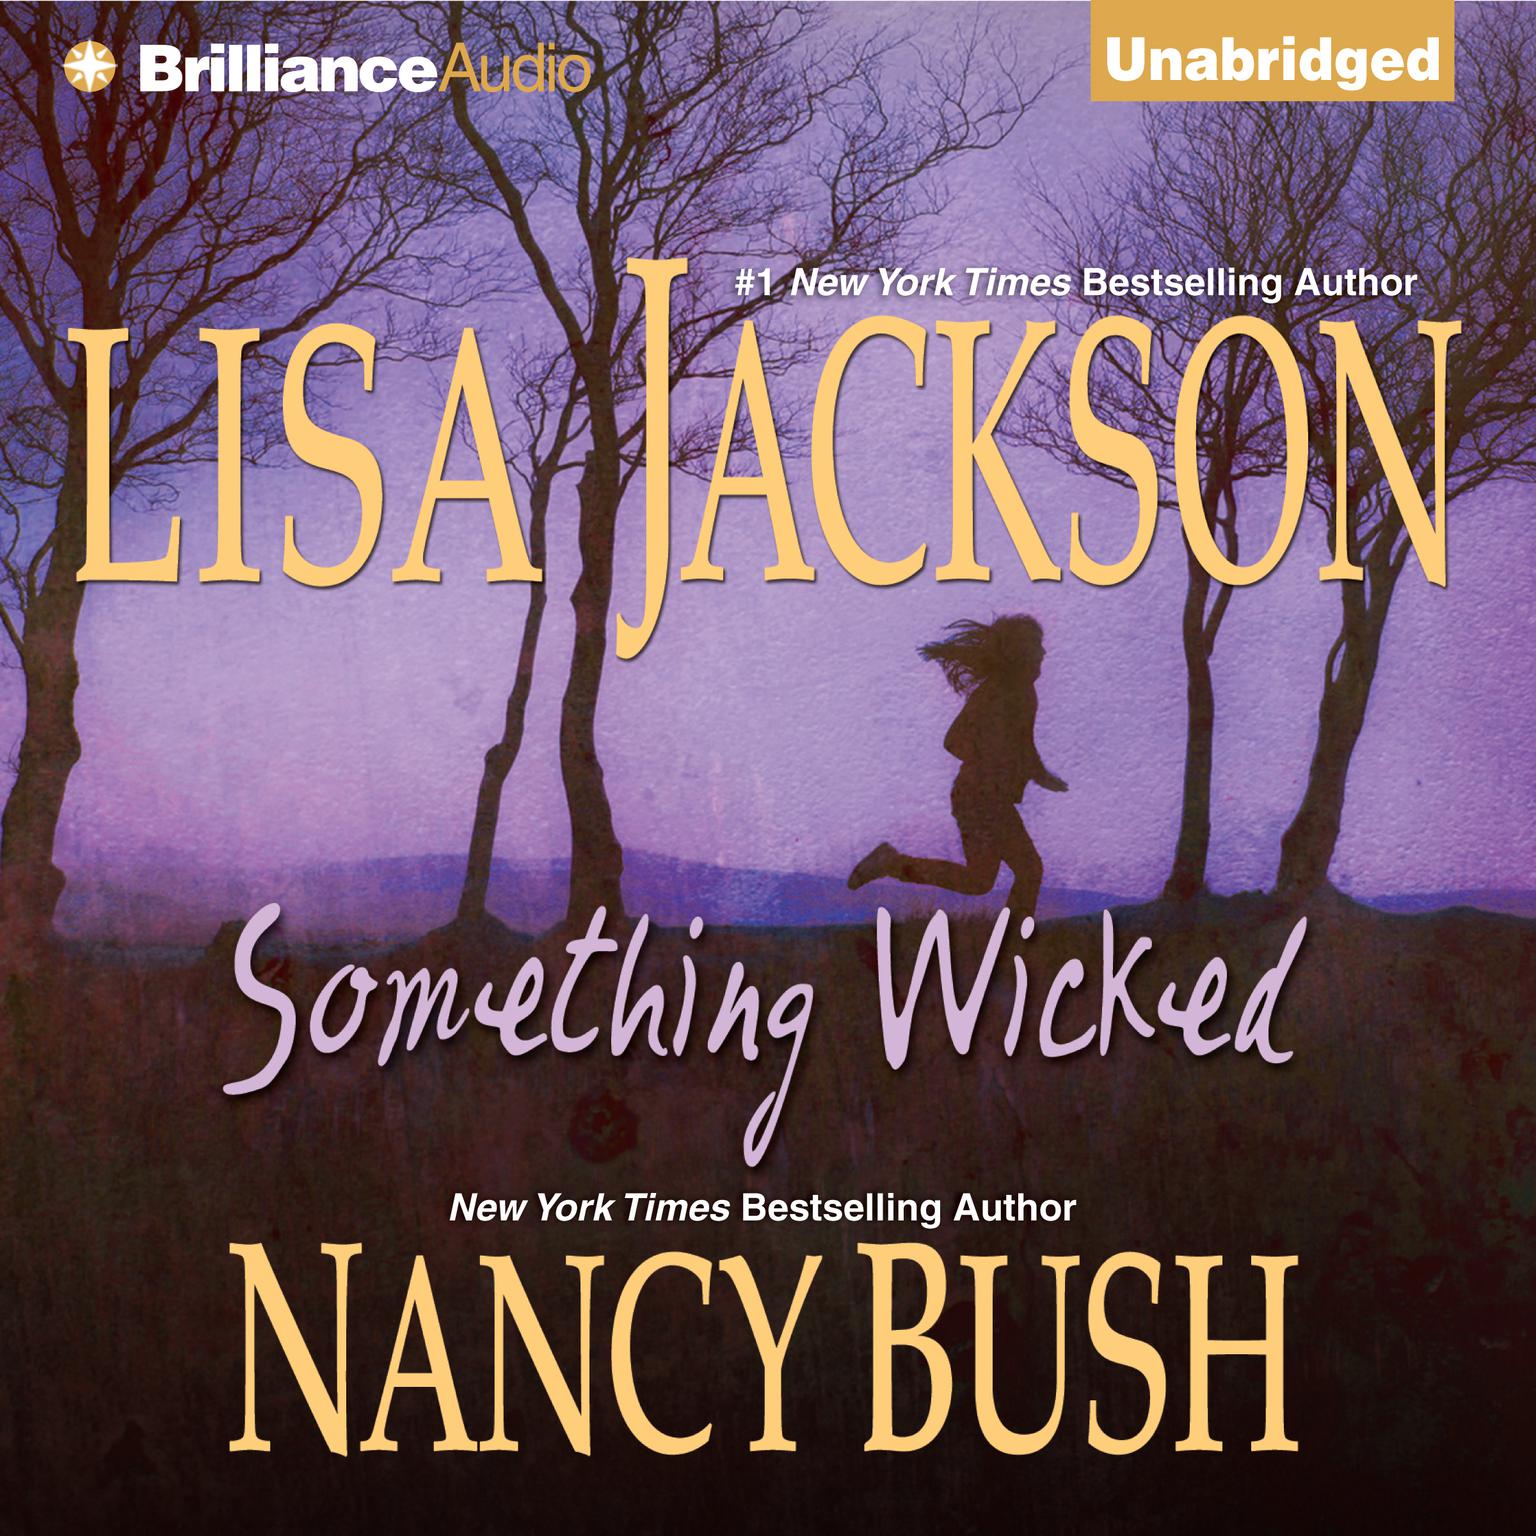 Something Wicked Audiobook, by Lisa Jackson